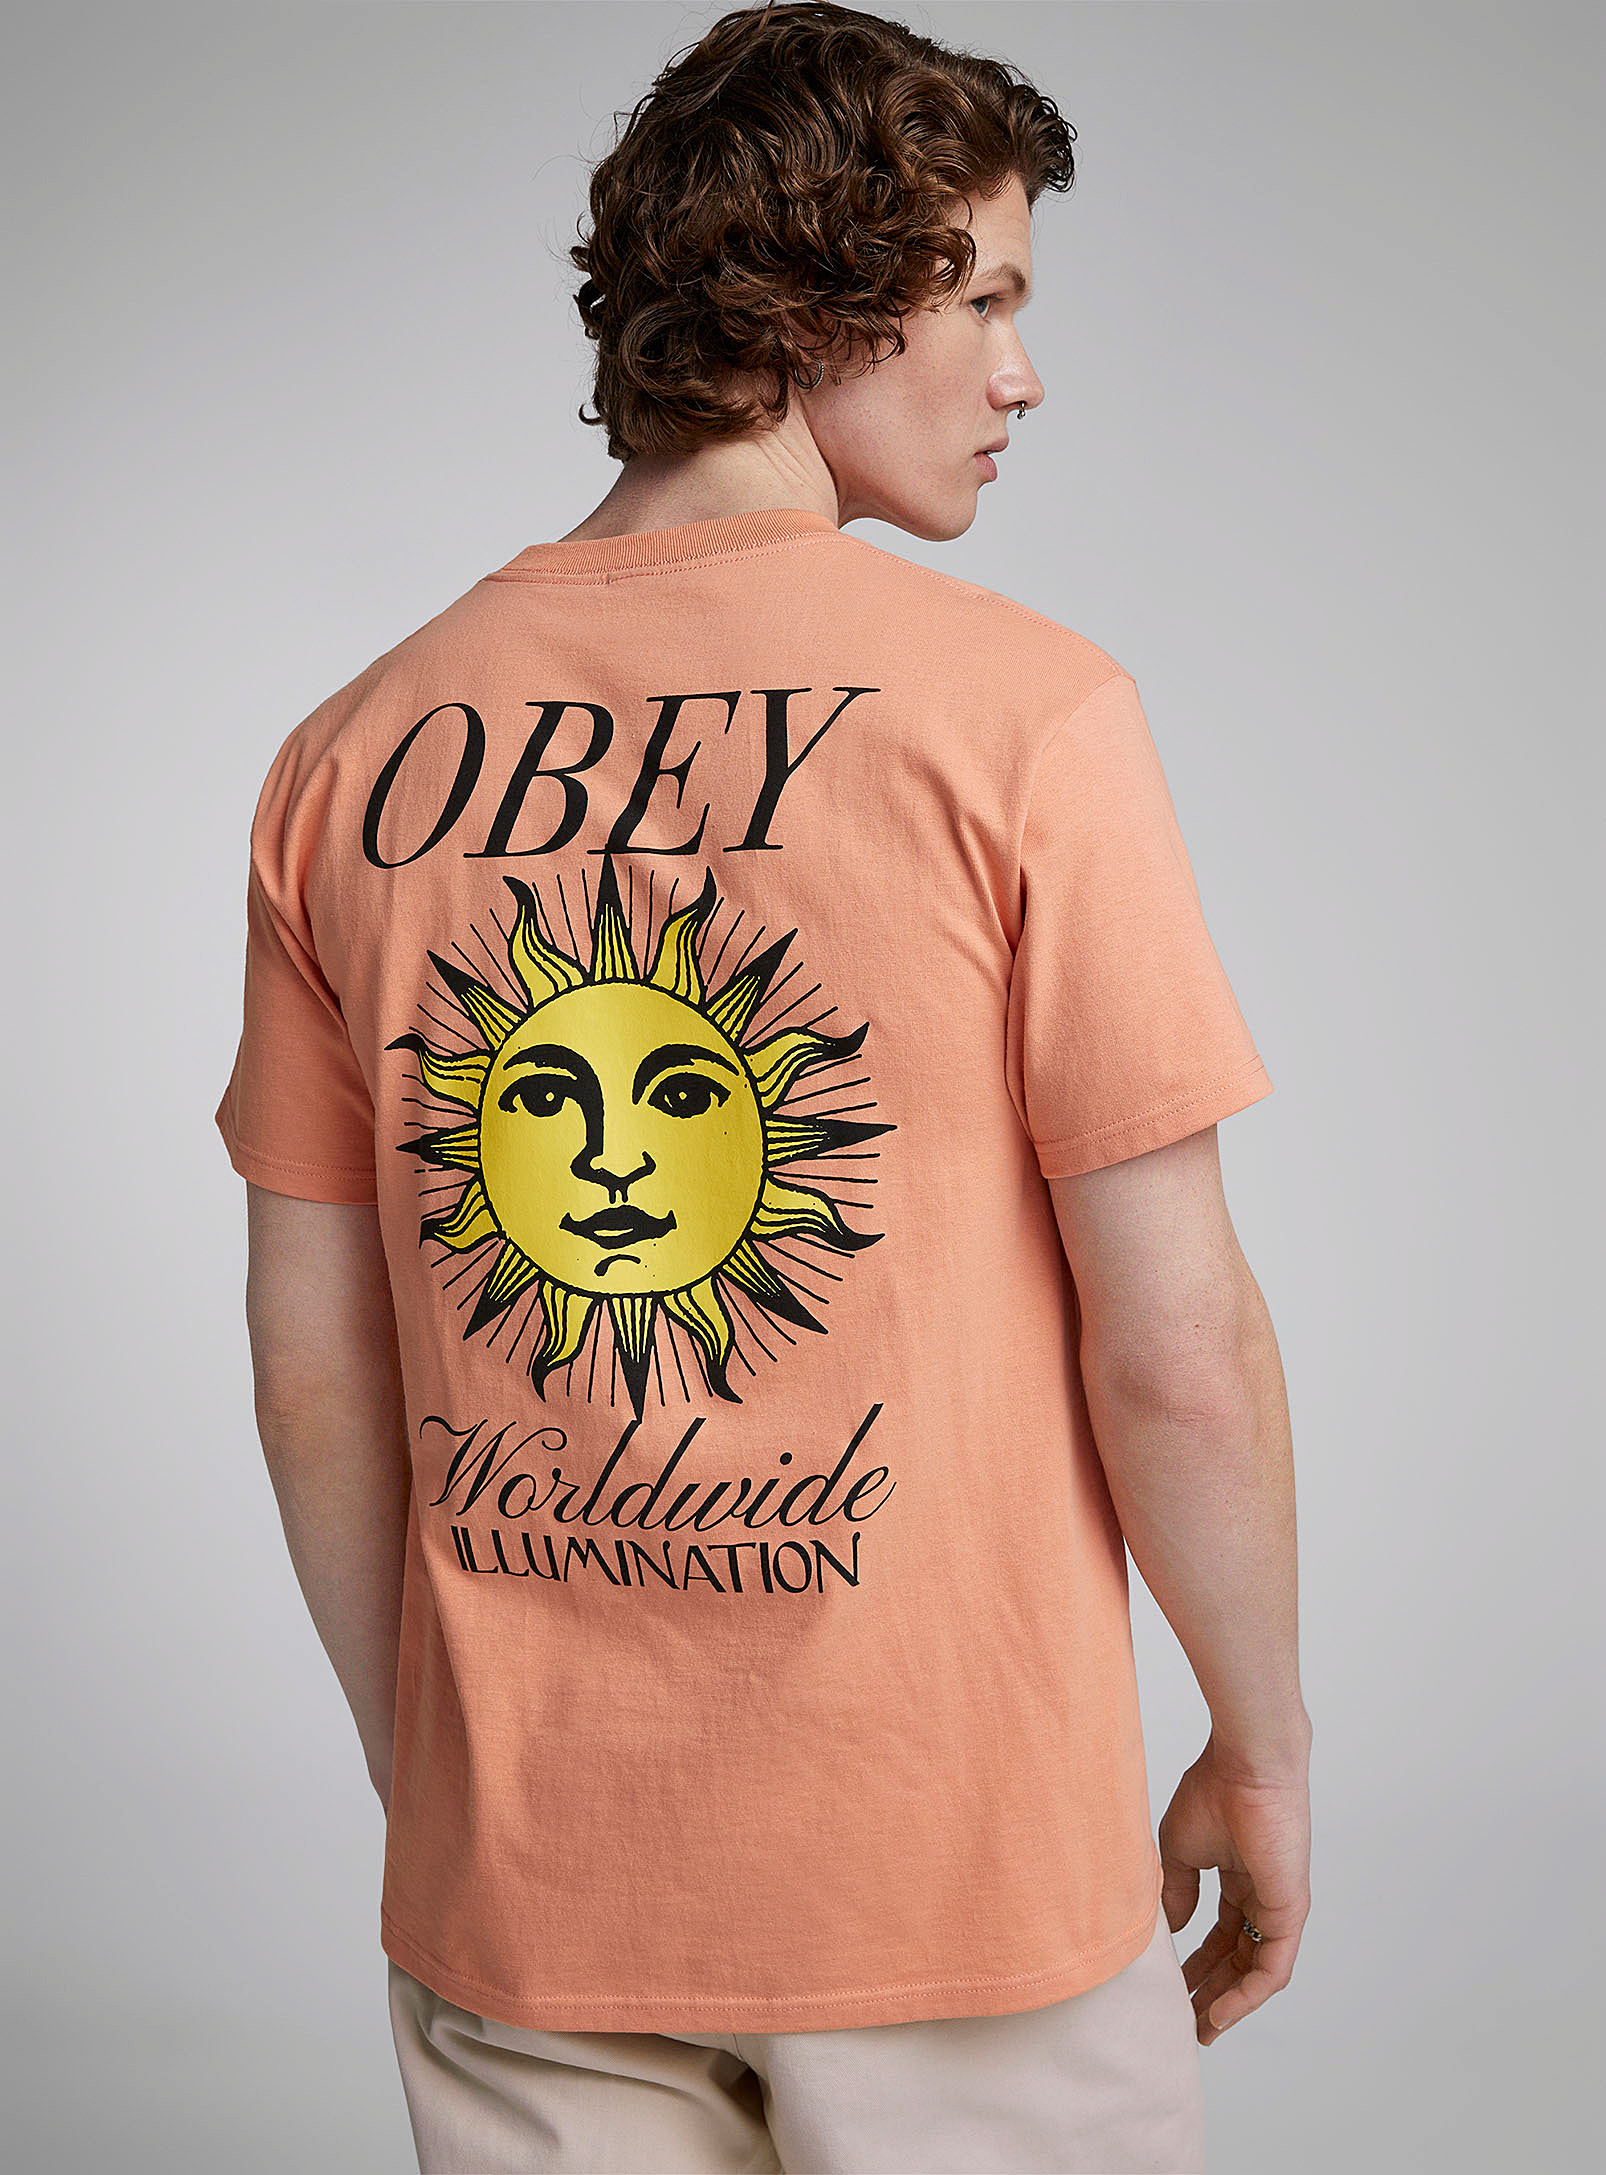 Obey - Le t-shirt illumination